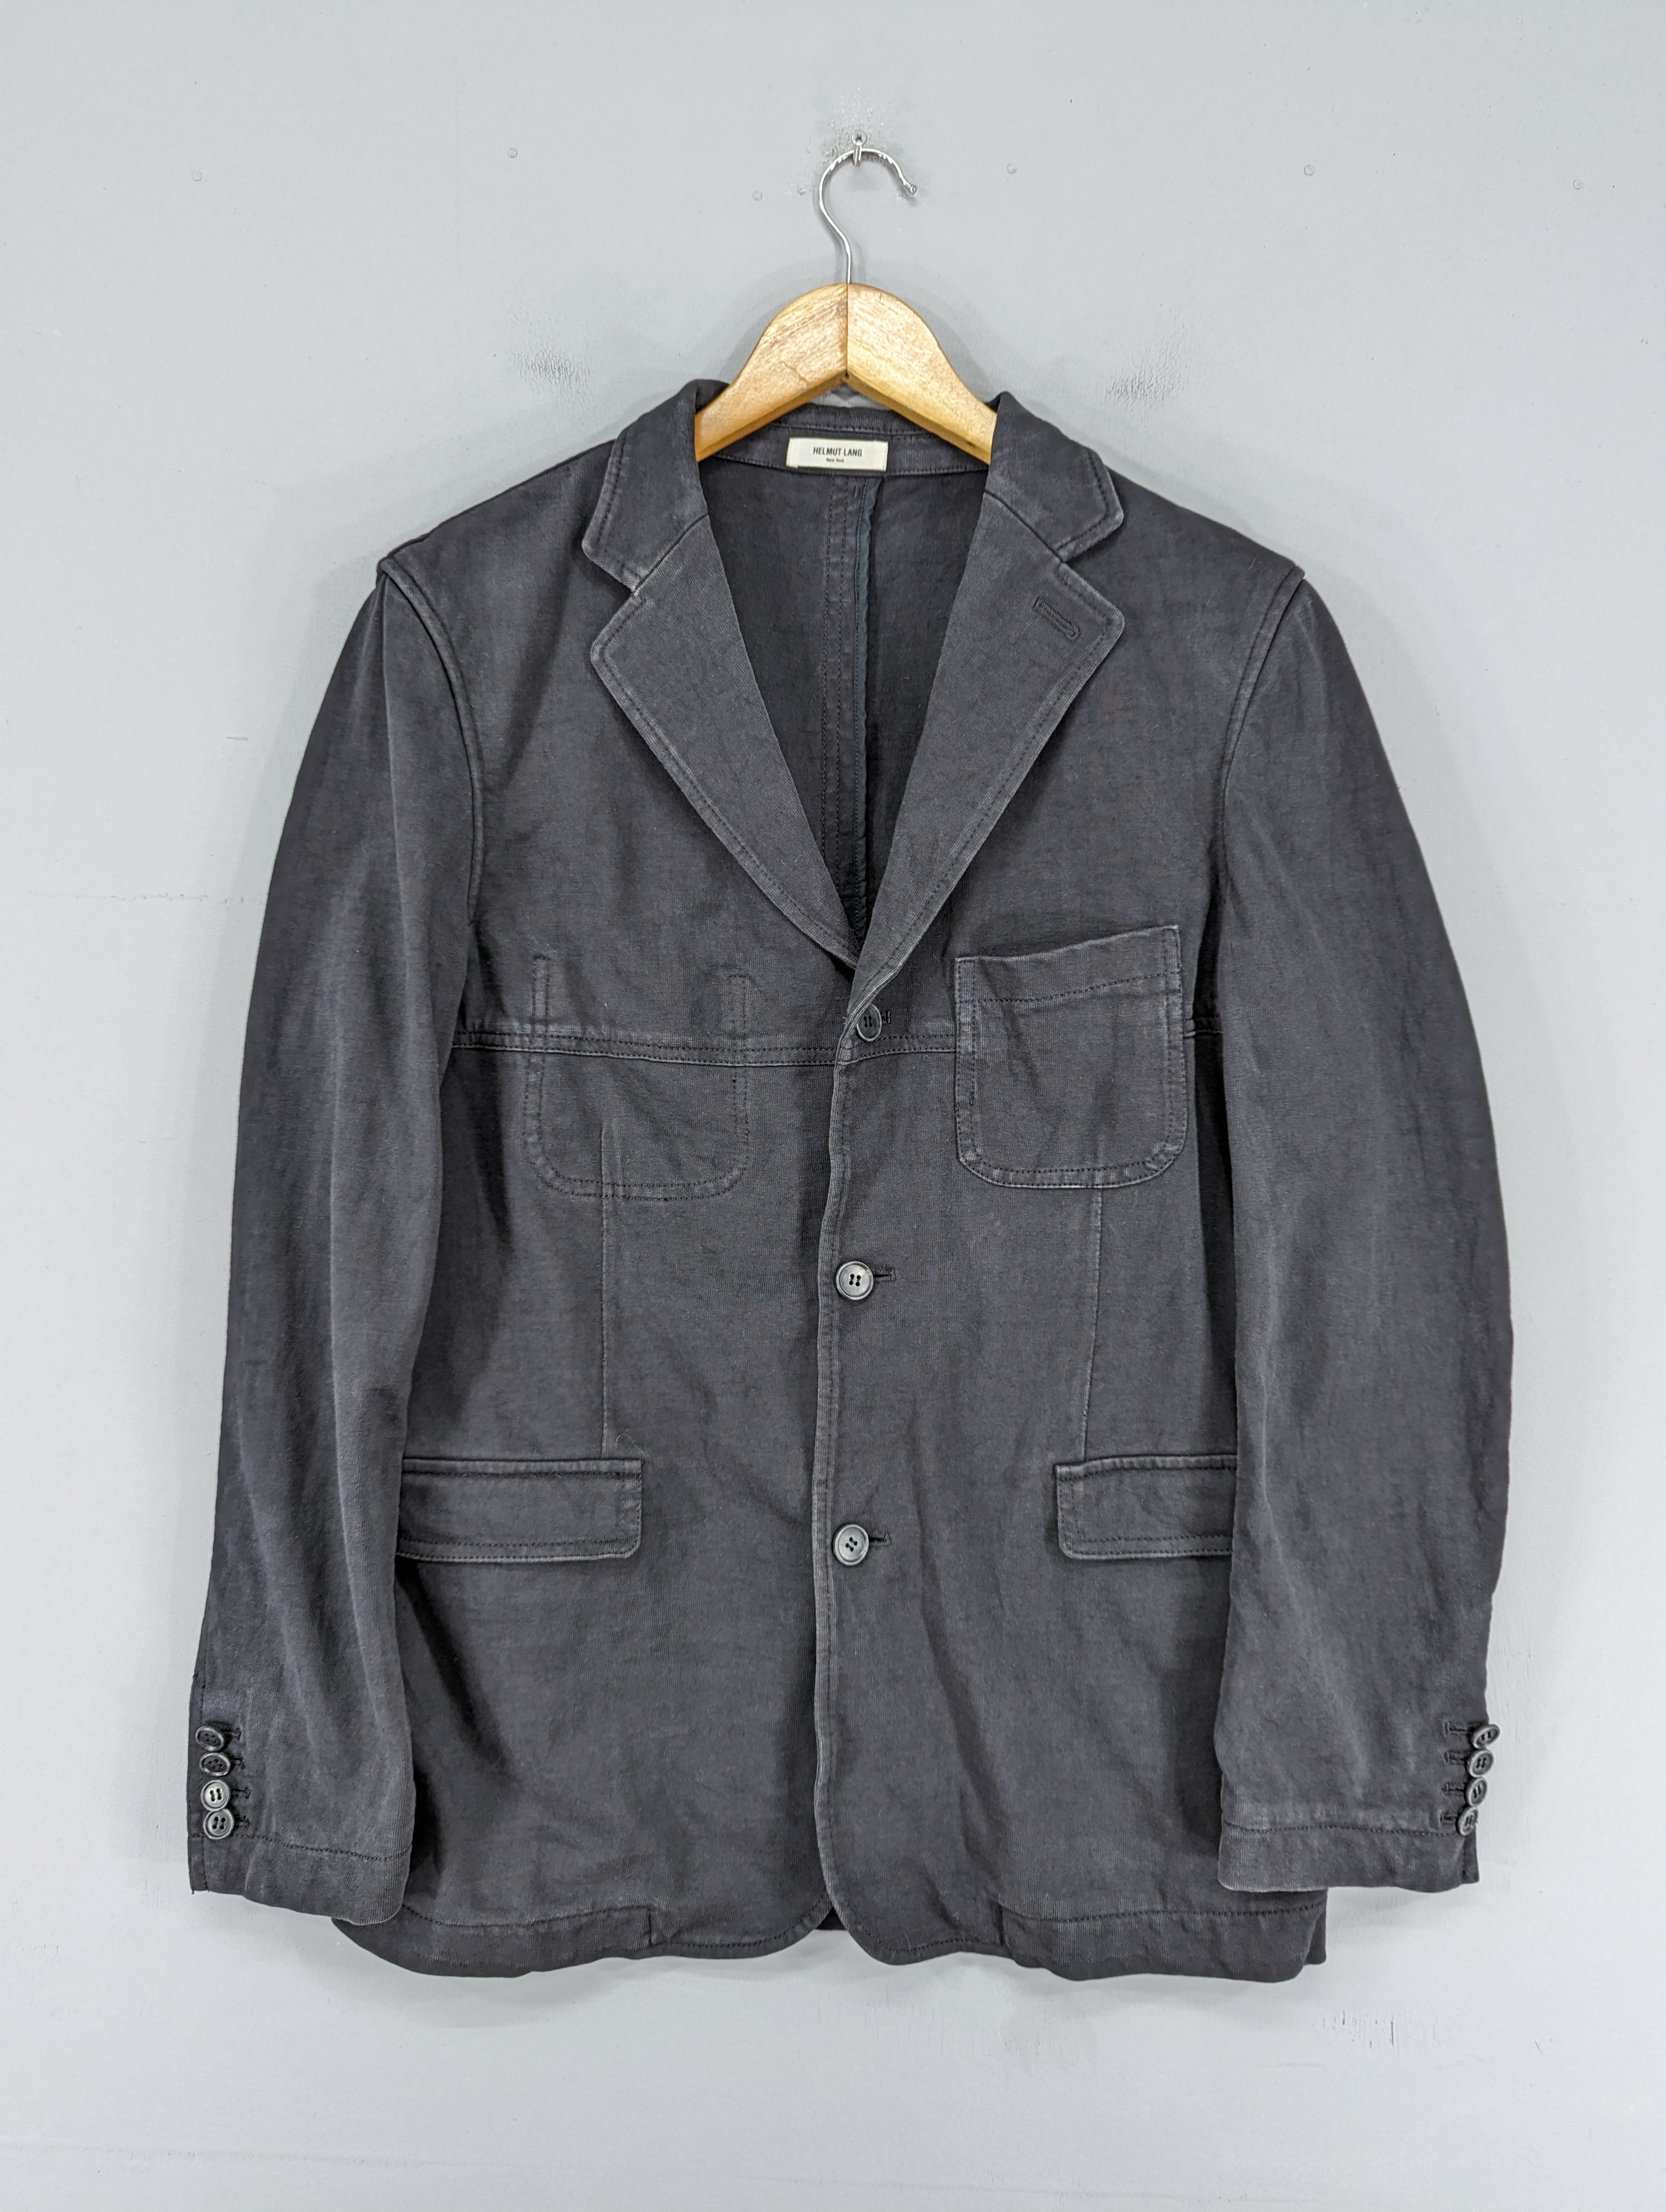 💥RARE💥Helmut Lang Faded Black Blazer Jacket - 1